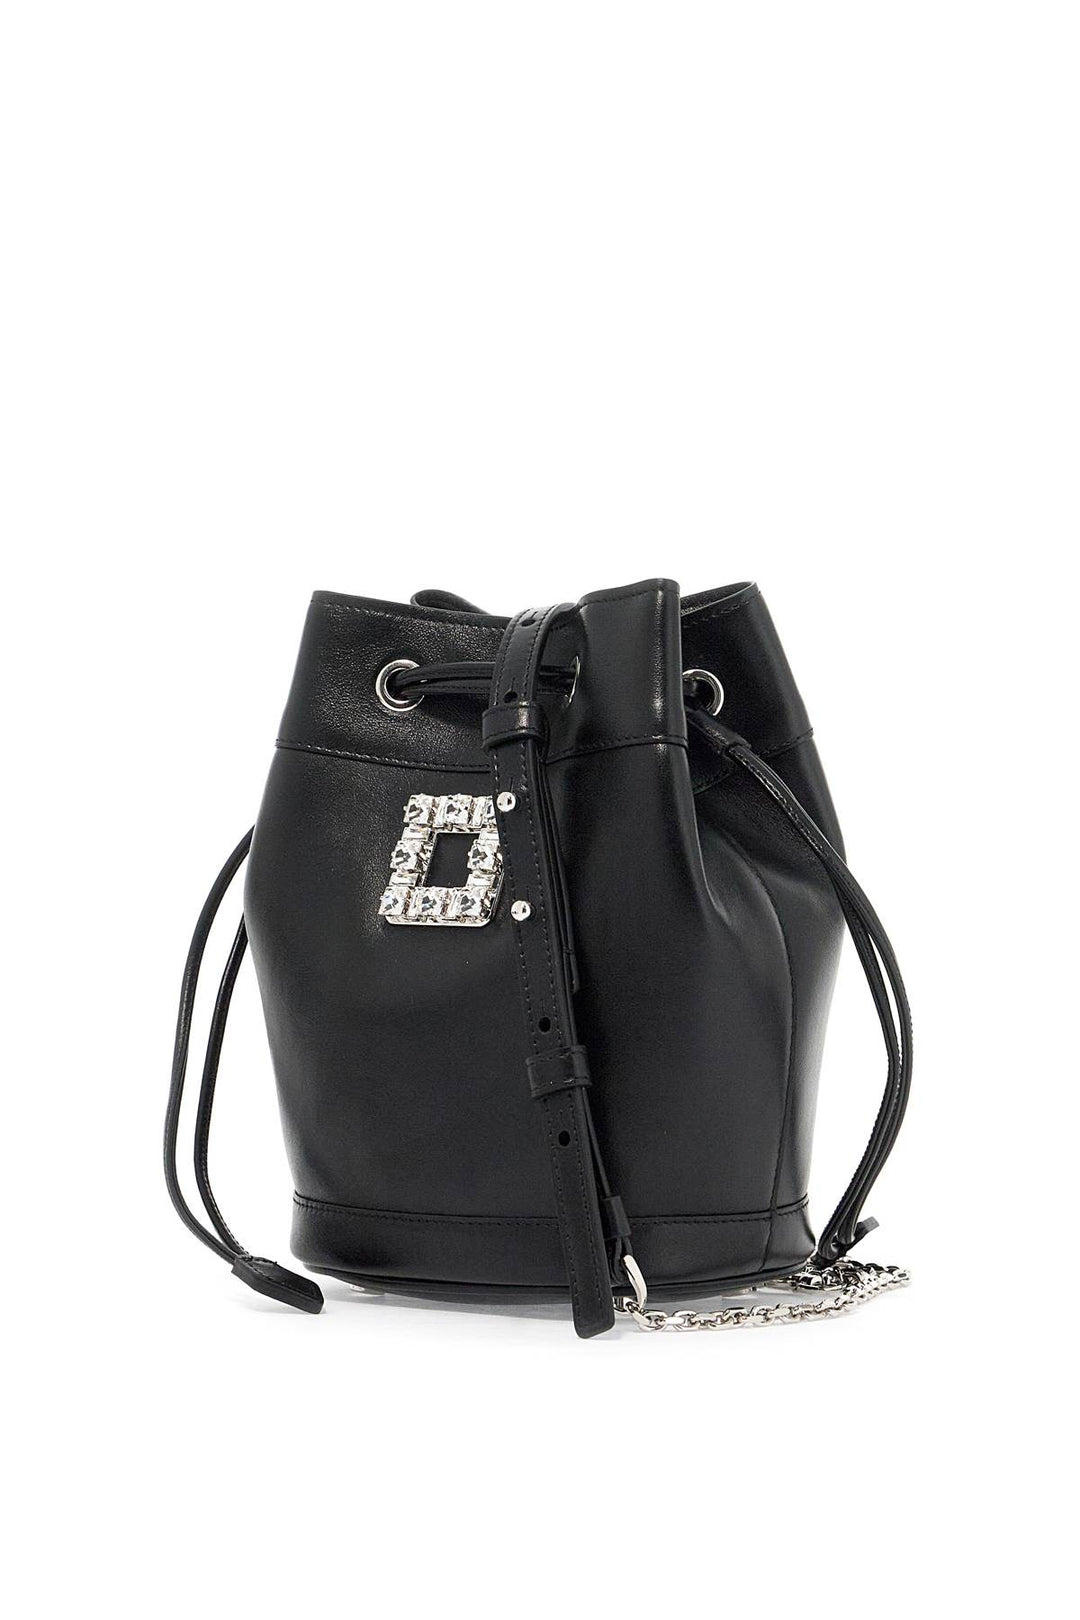 Roger Vivier Mini Leather Très Vivier Bucket Bag   Black